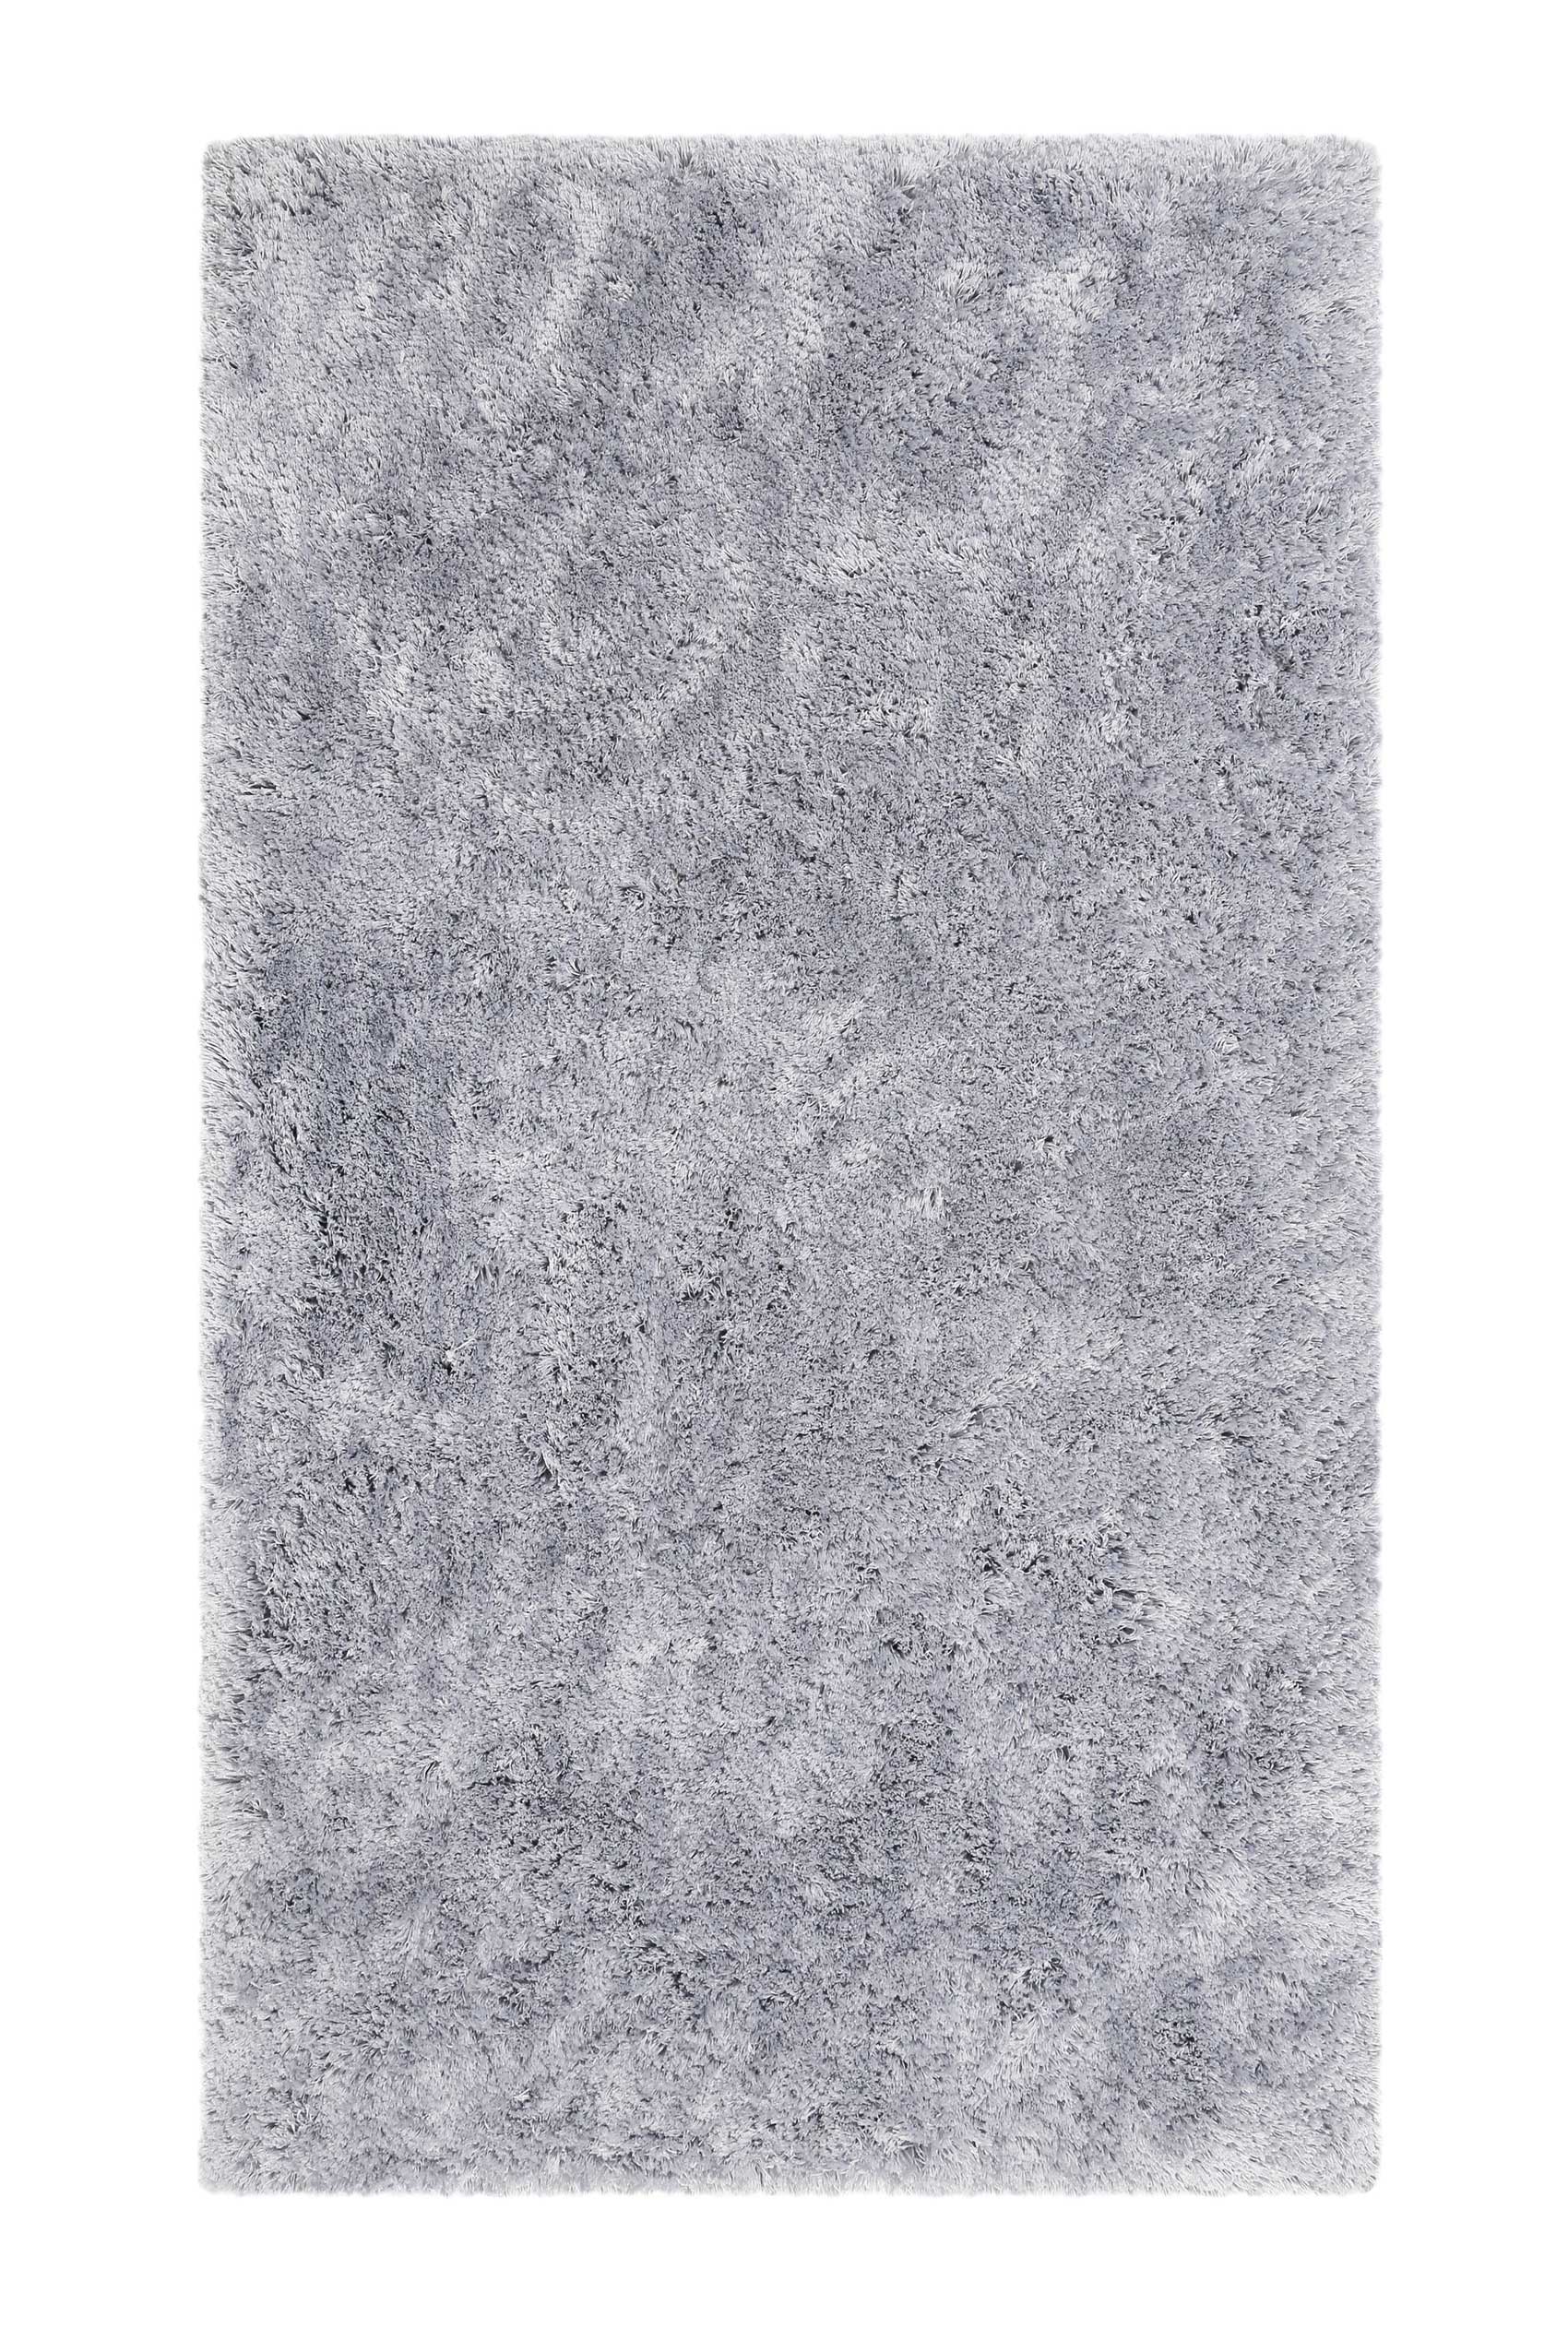 Tapis de bain microfibre antidérapant gris clair 70x120